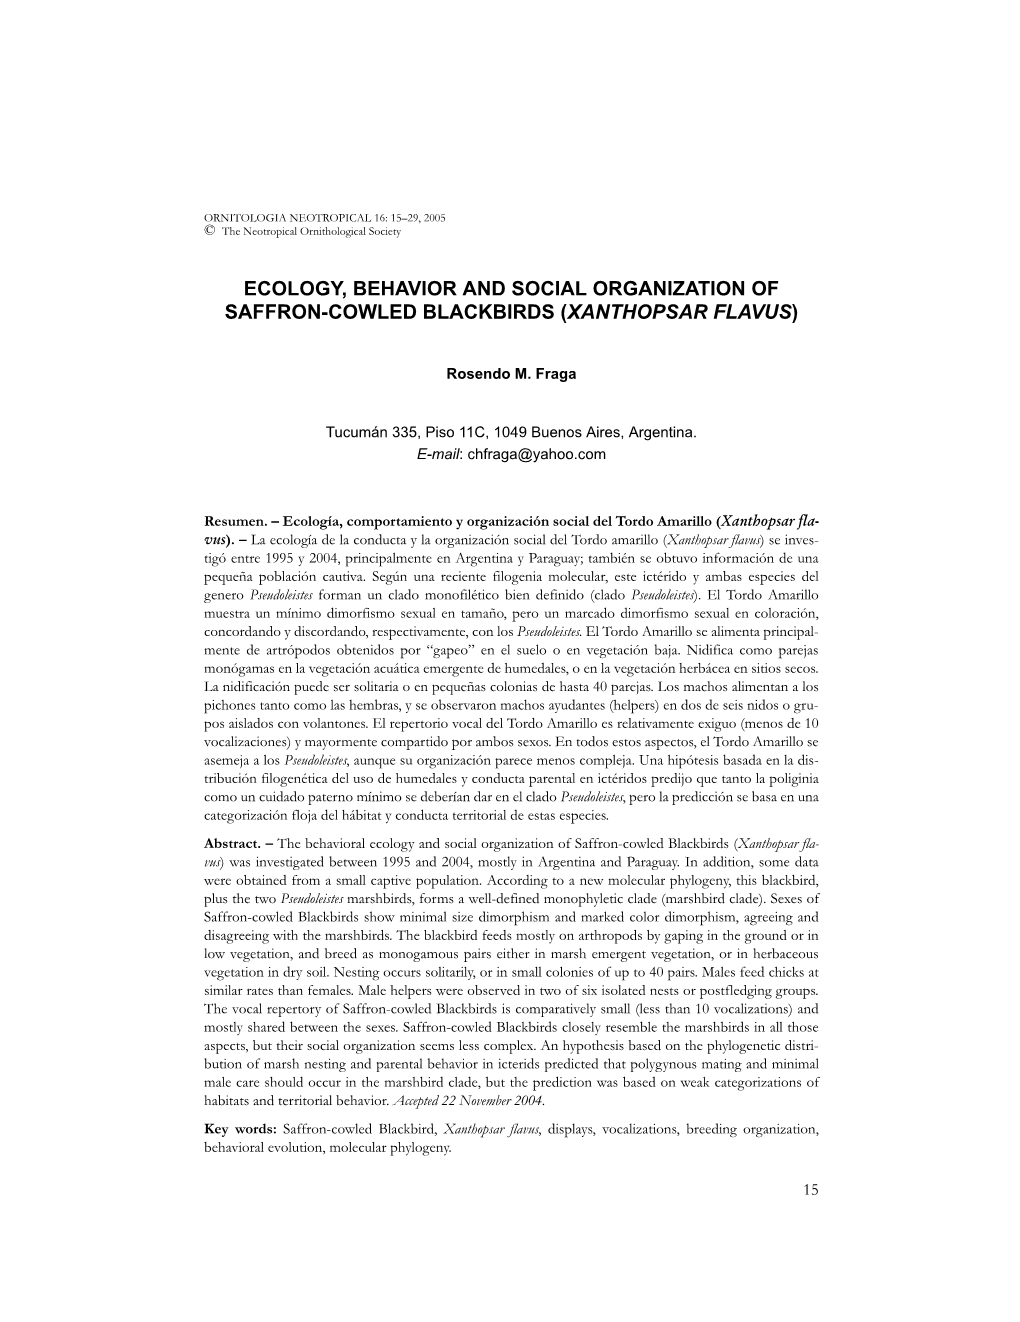 Ecology, Behavior and Social Organization of Saffron-Cowled Blackbirds (Xanthopsar Flavus)